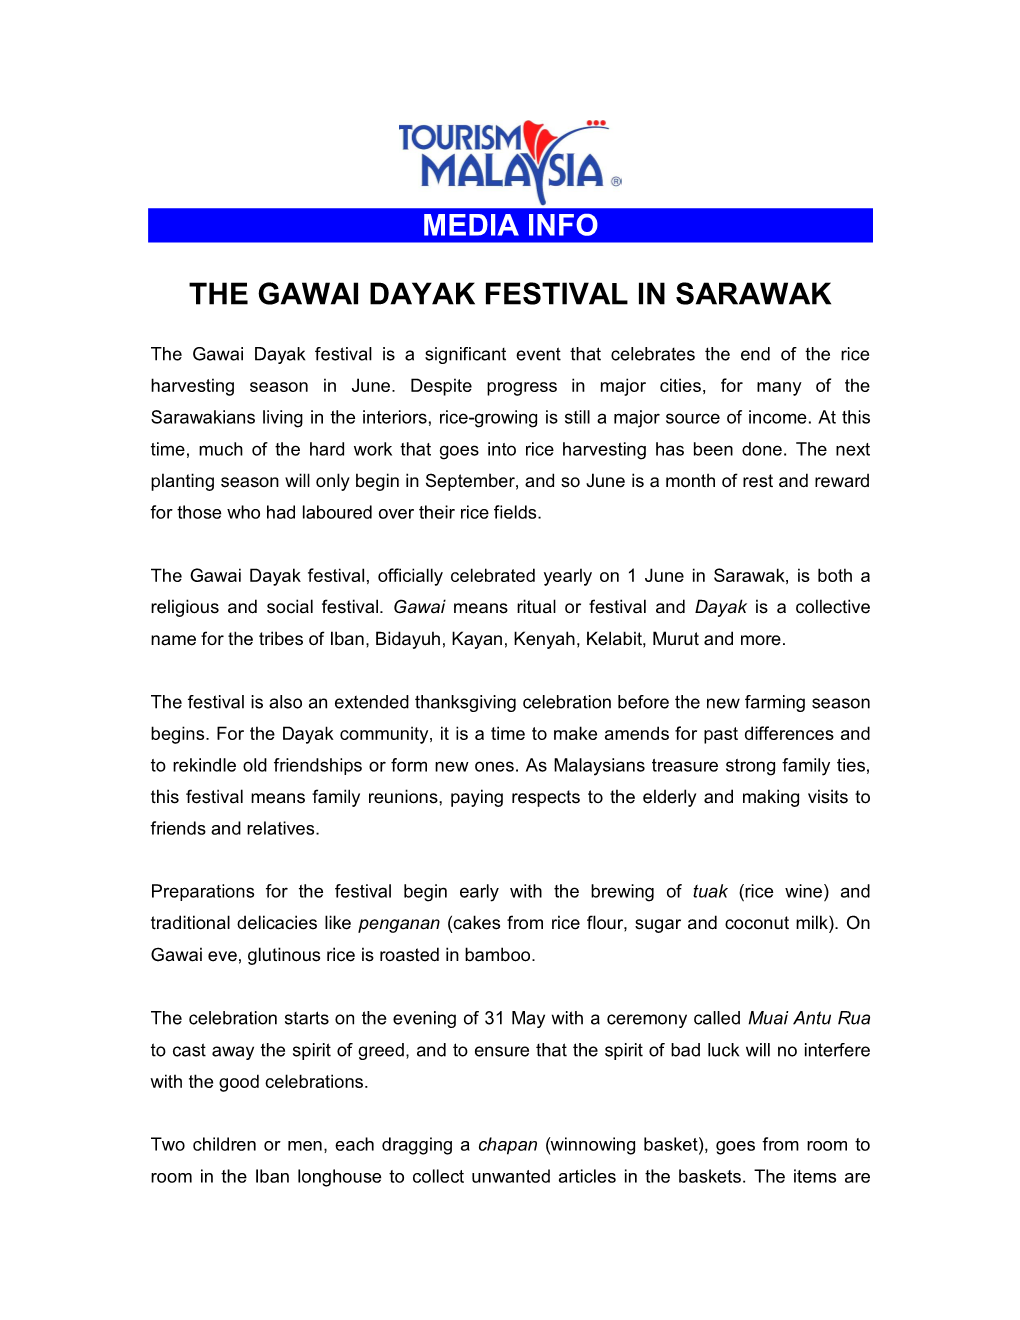 Media Info the Gawai Dayak Festival in Sarawak